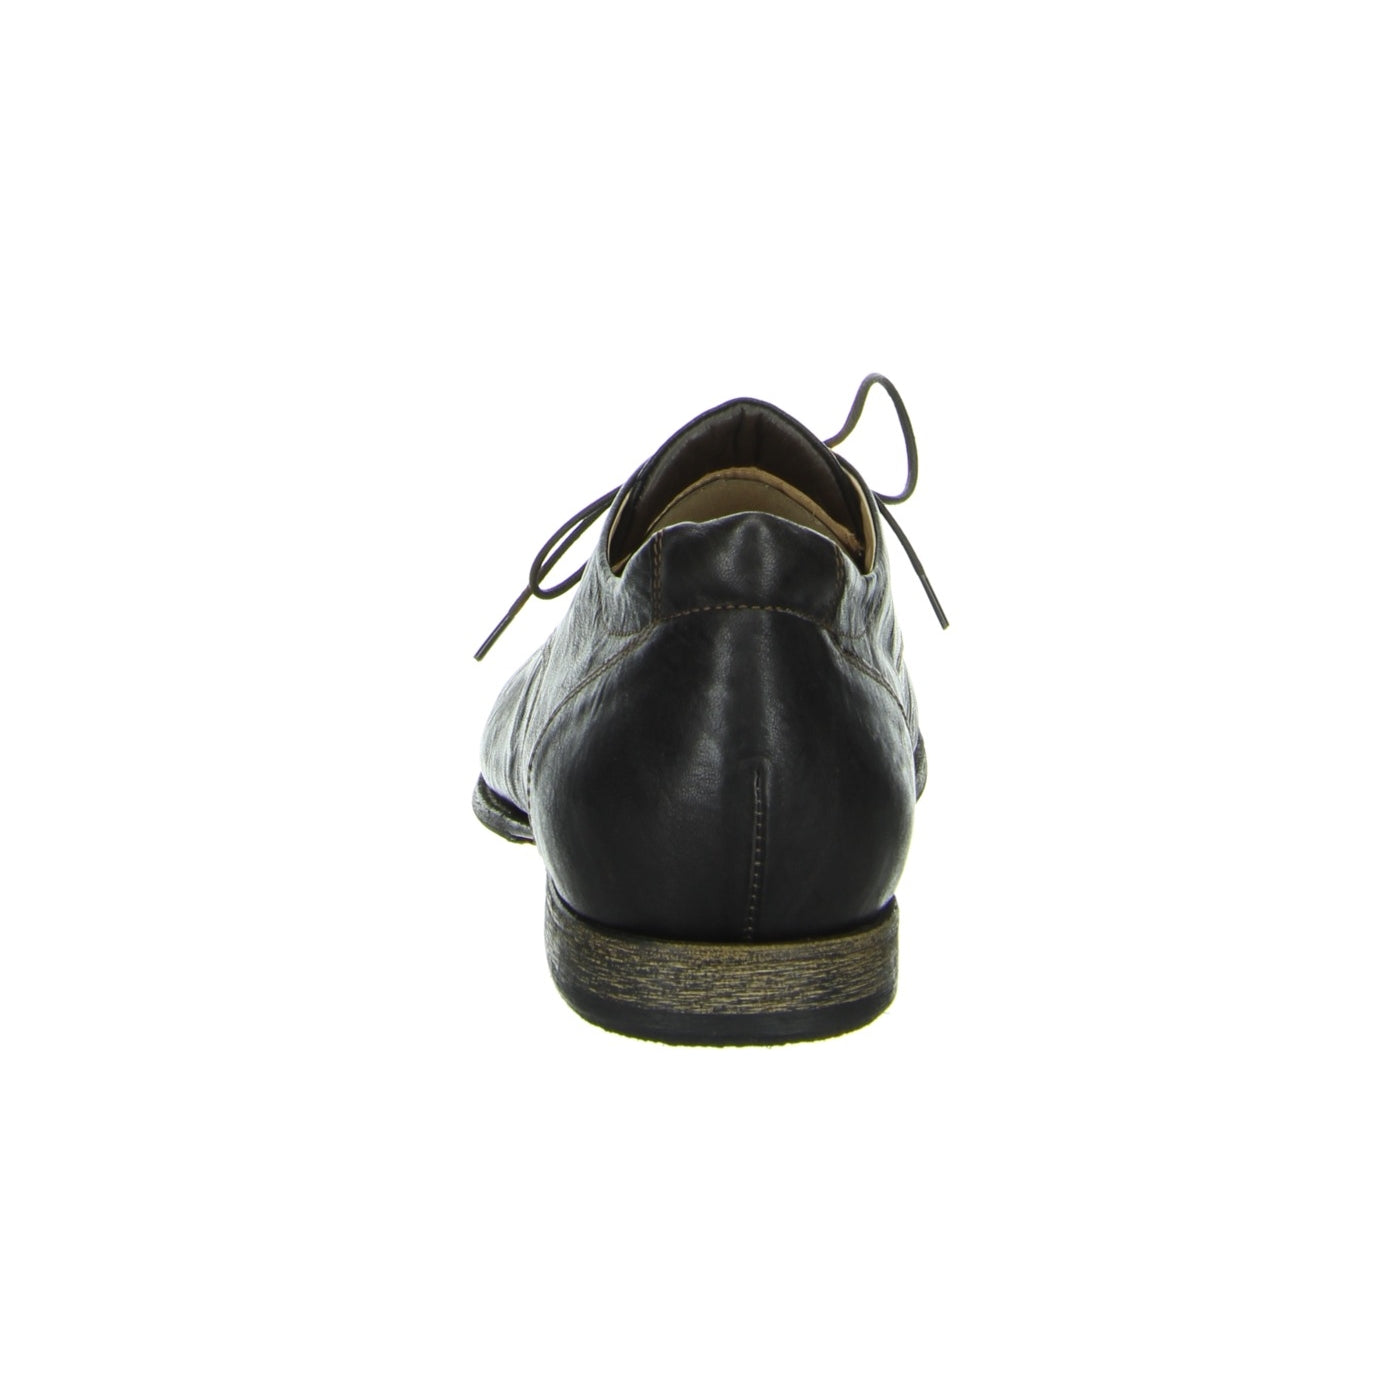 Think Shoes USA GURU Lace Up Shoes - Black 88690-41